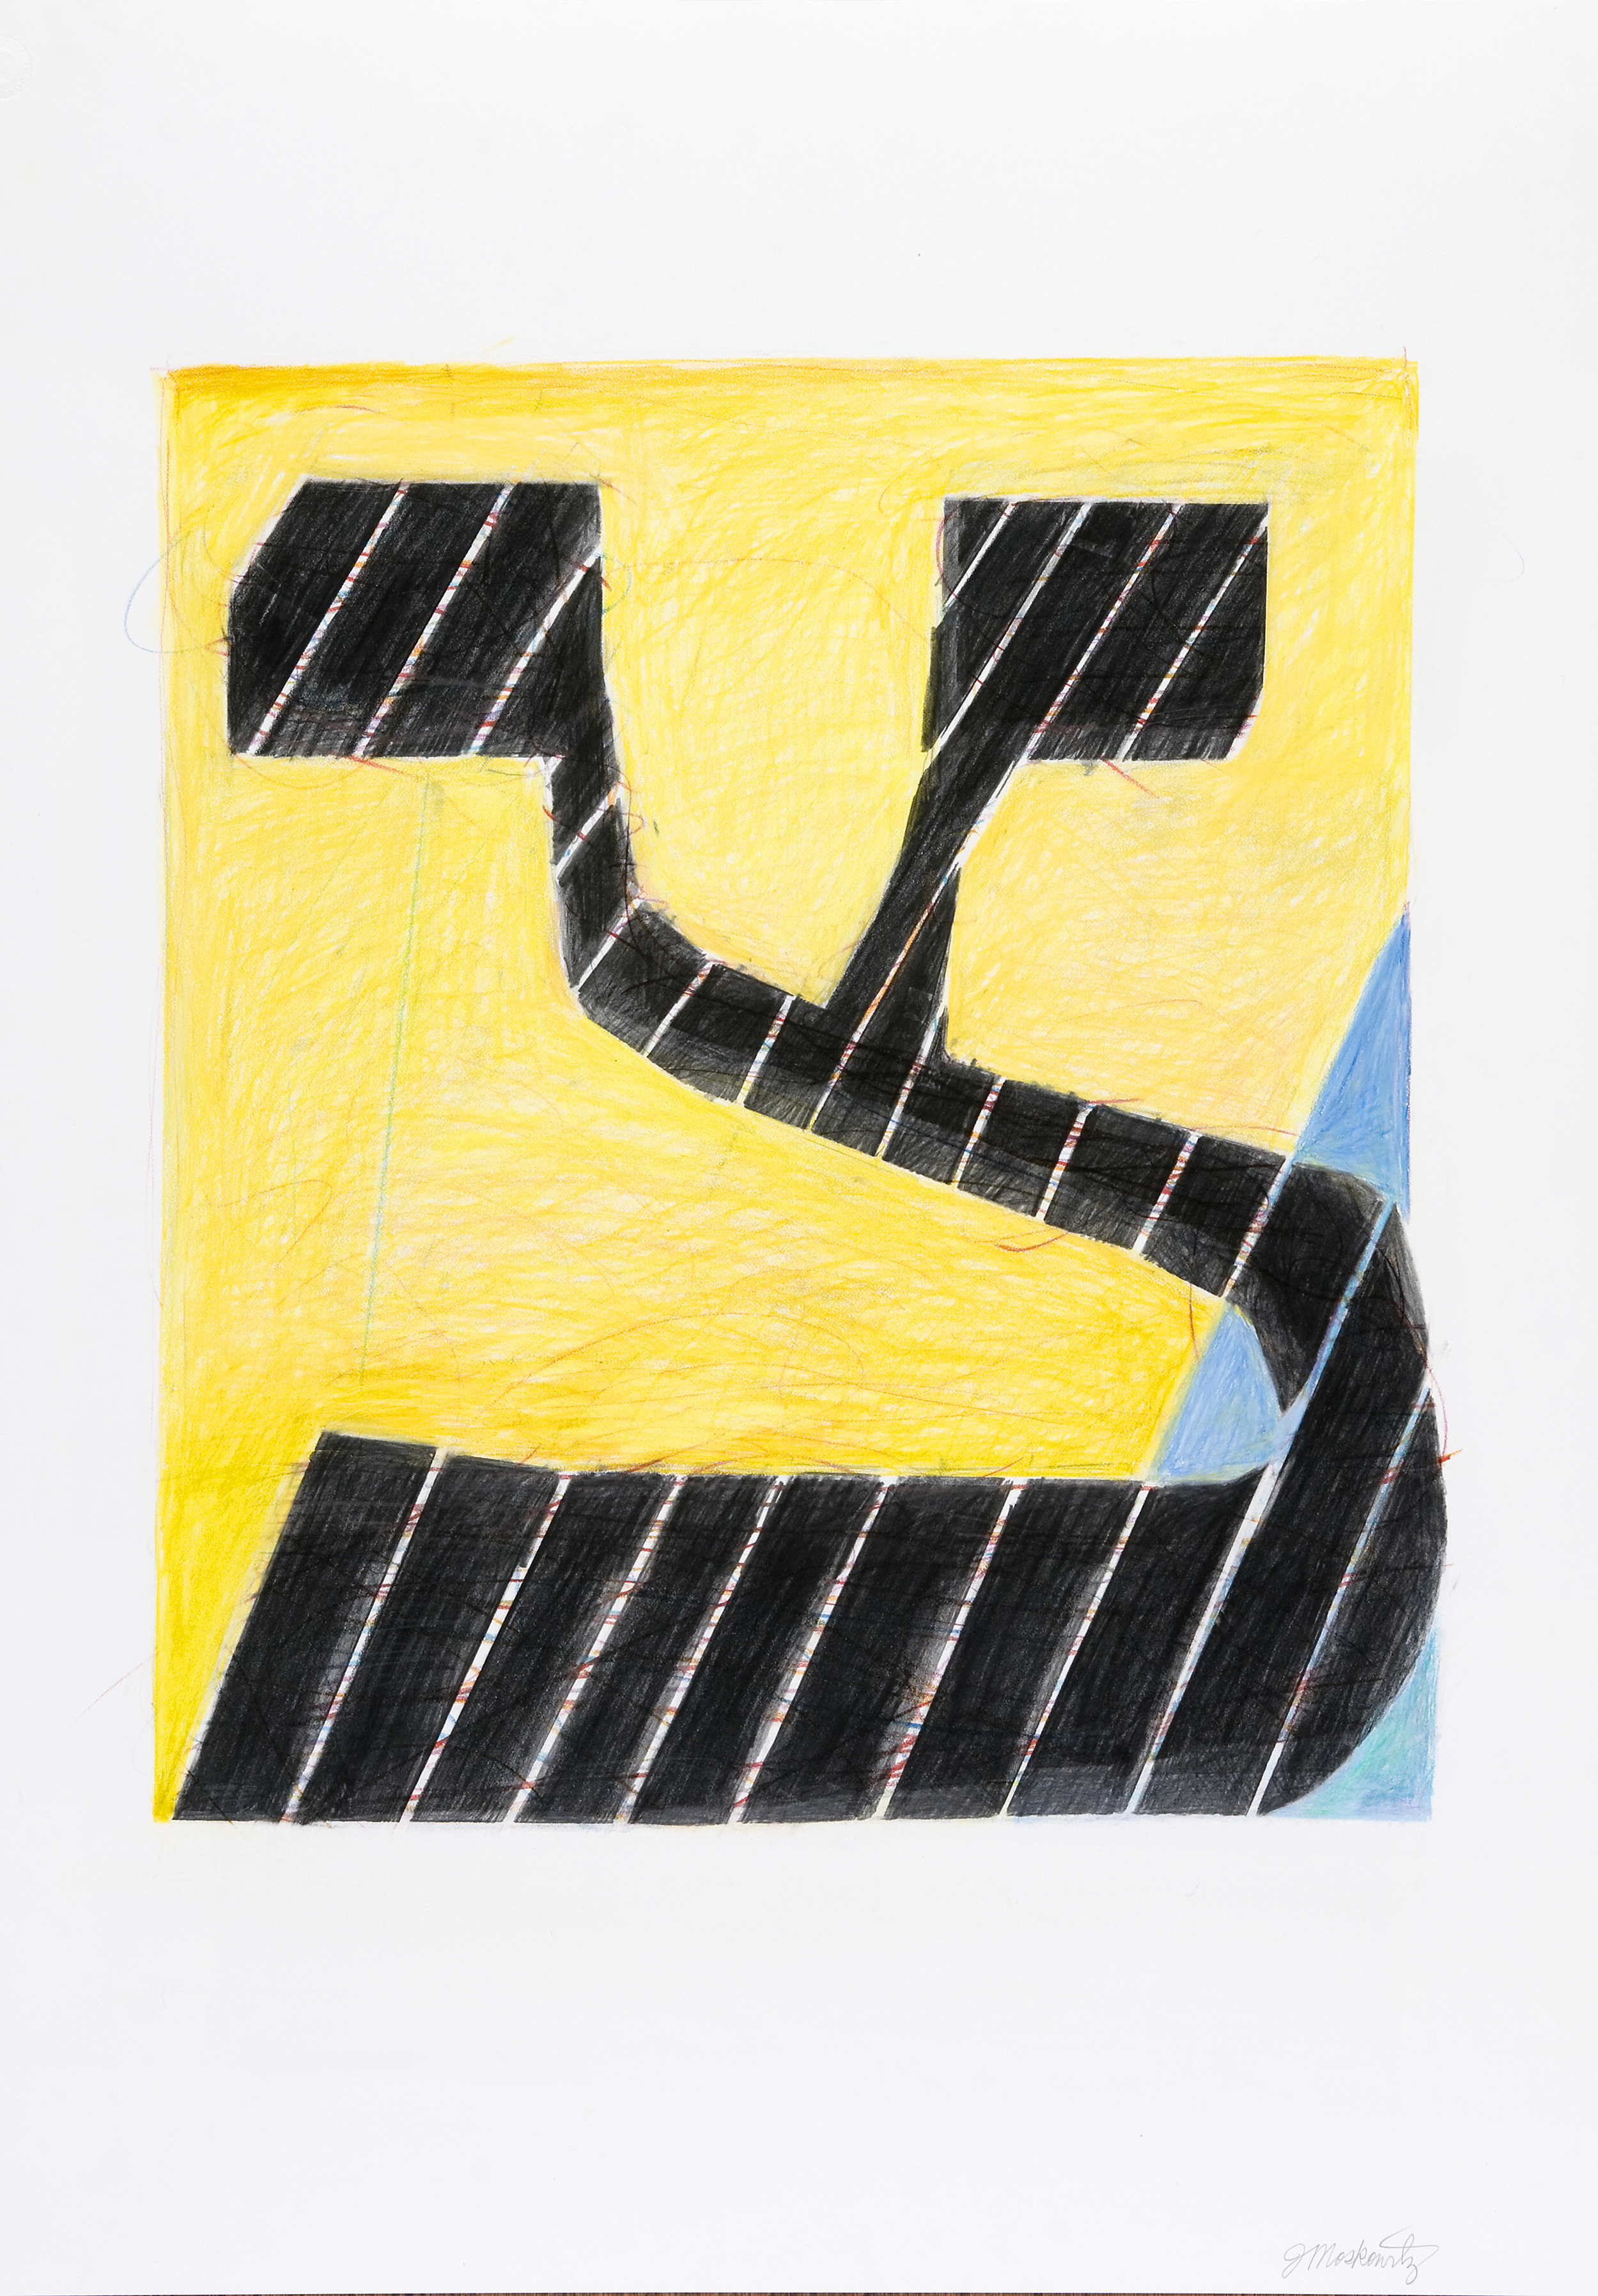  Joel Moskowitz " Tsadee " graphite and colored pencil, 29"x22" 